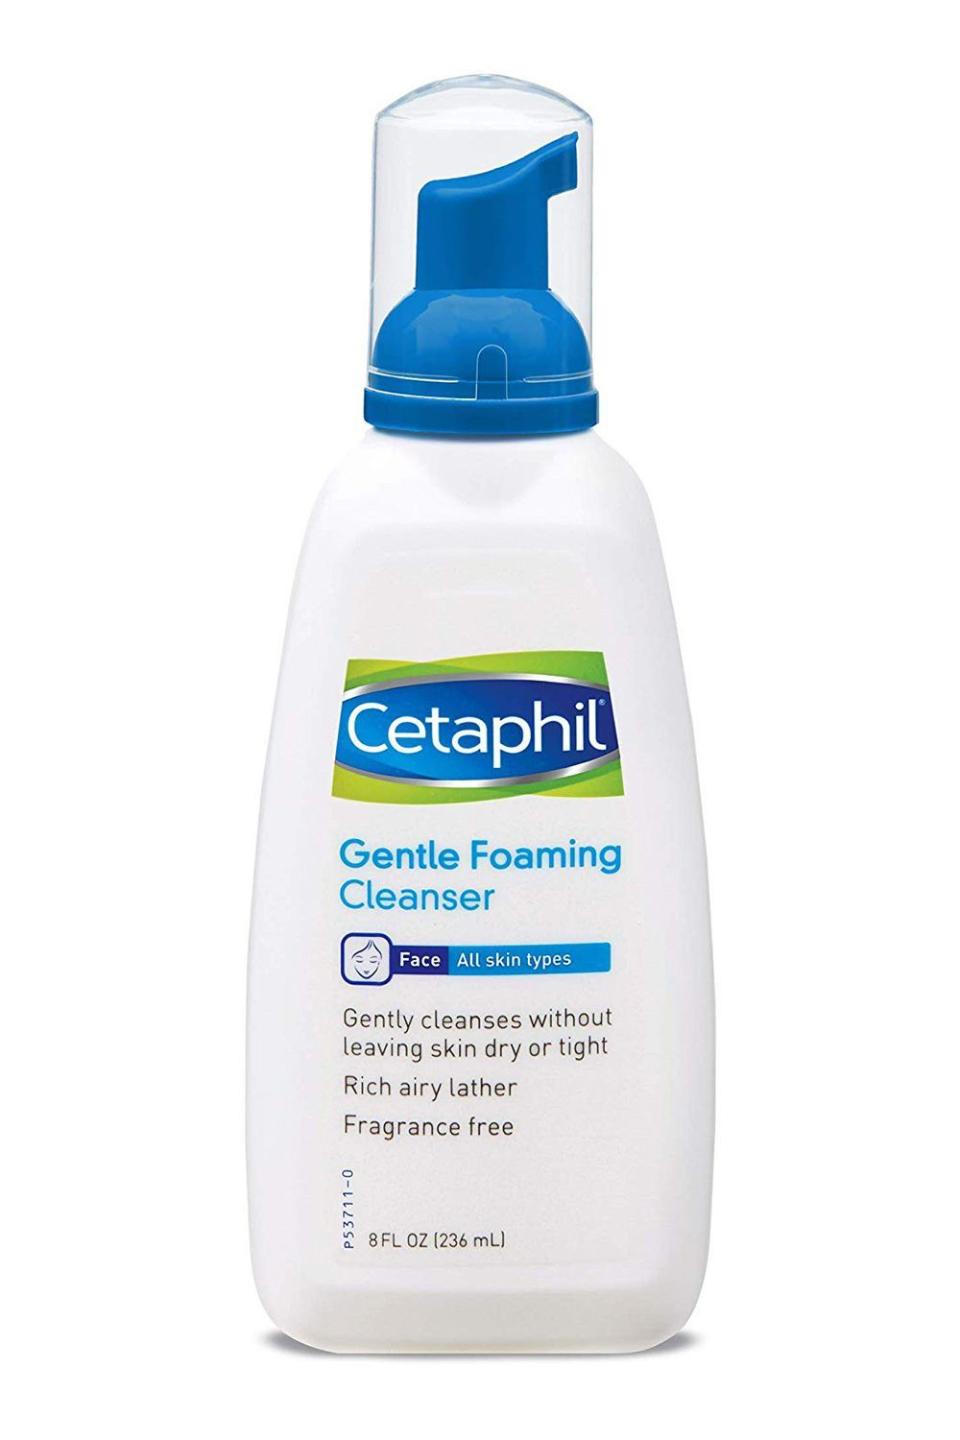 8) Cetaphil Foaming Facial Cleanser